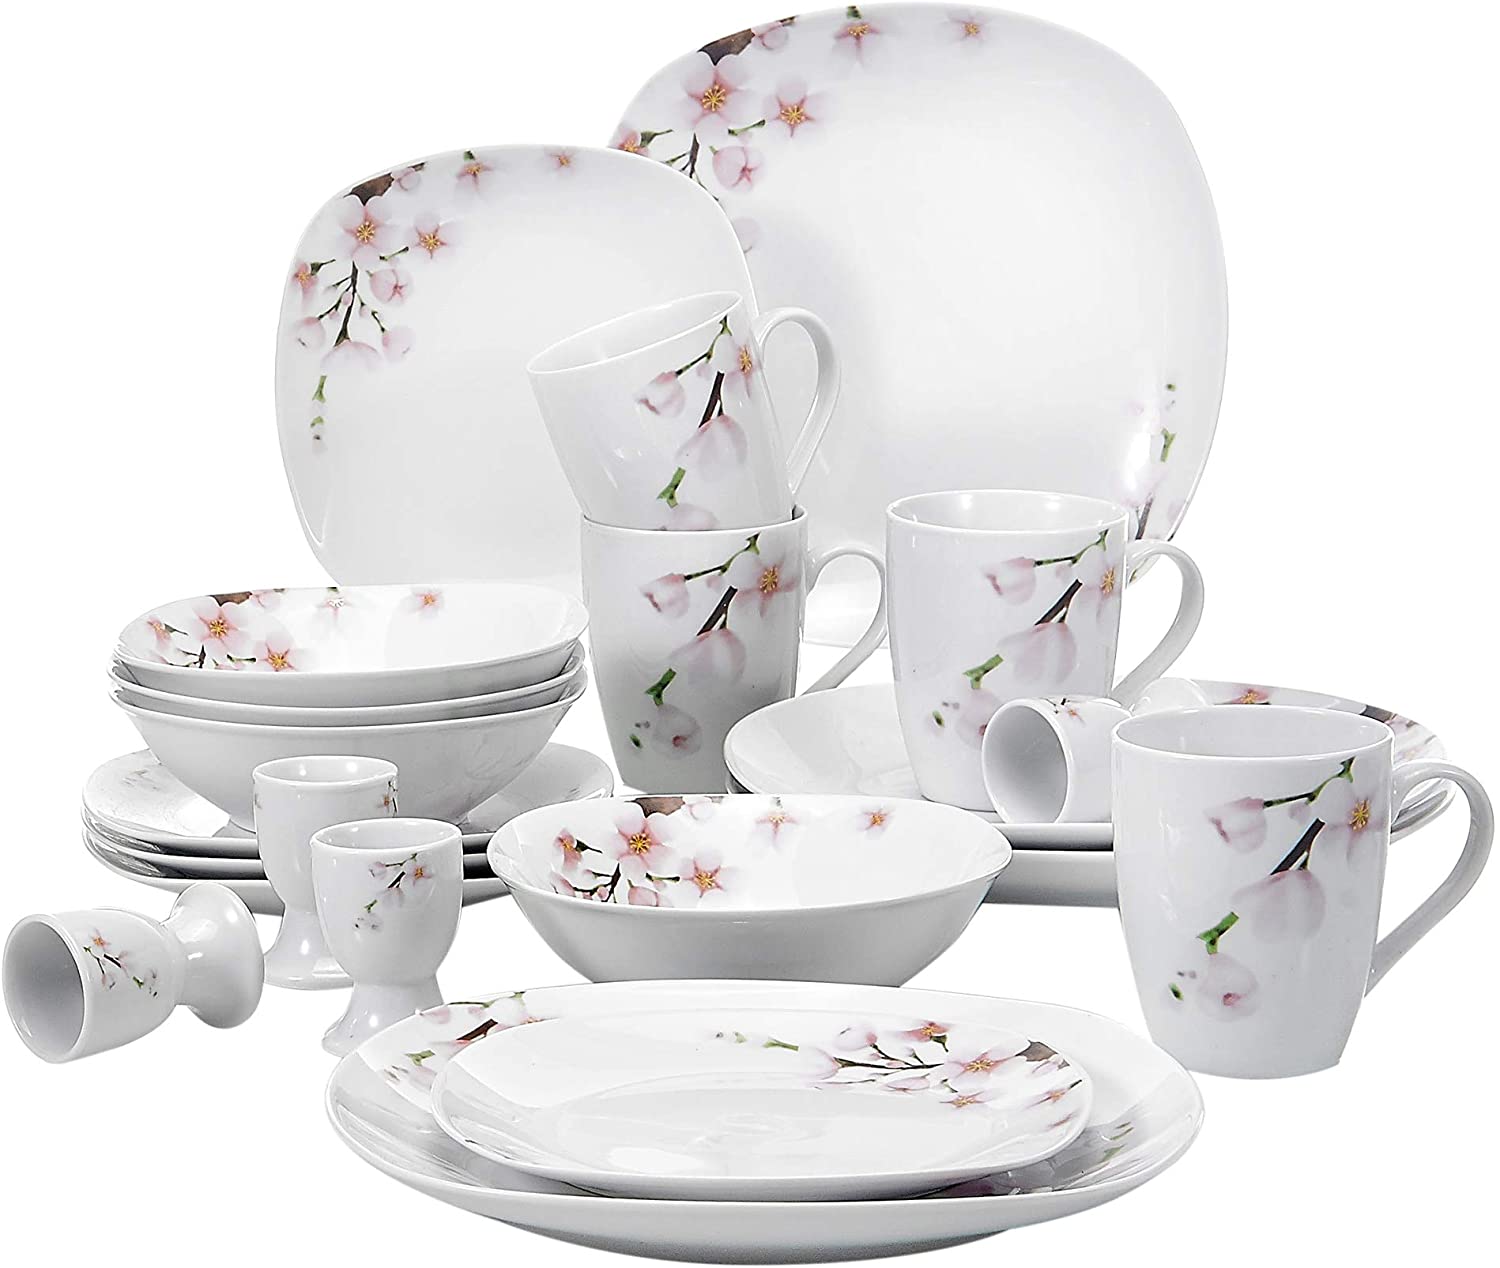 Veweet Annie Porcelain Dinner Service Set, 18 / 36-Piece Crockery Set, 20